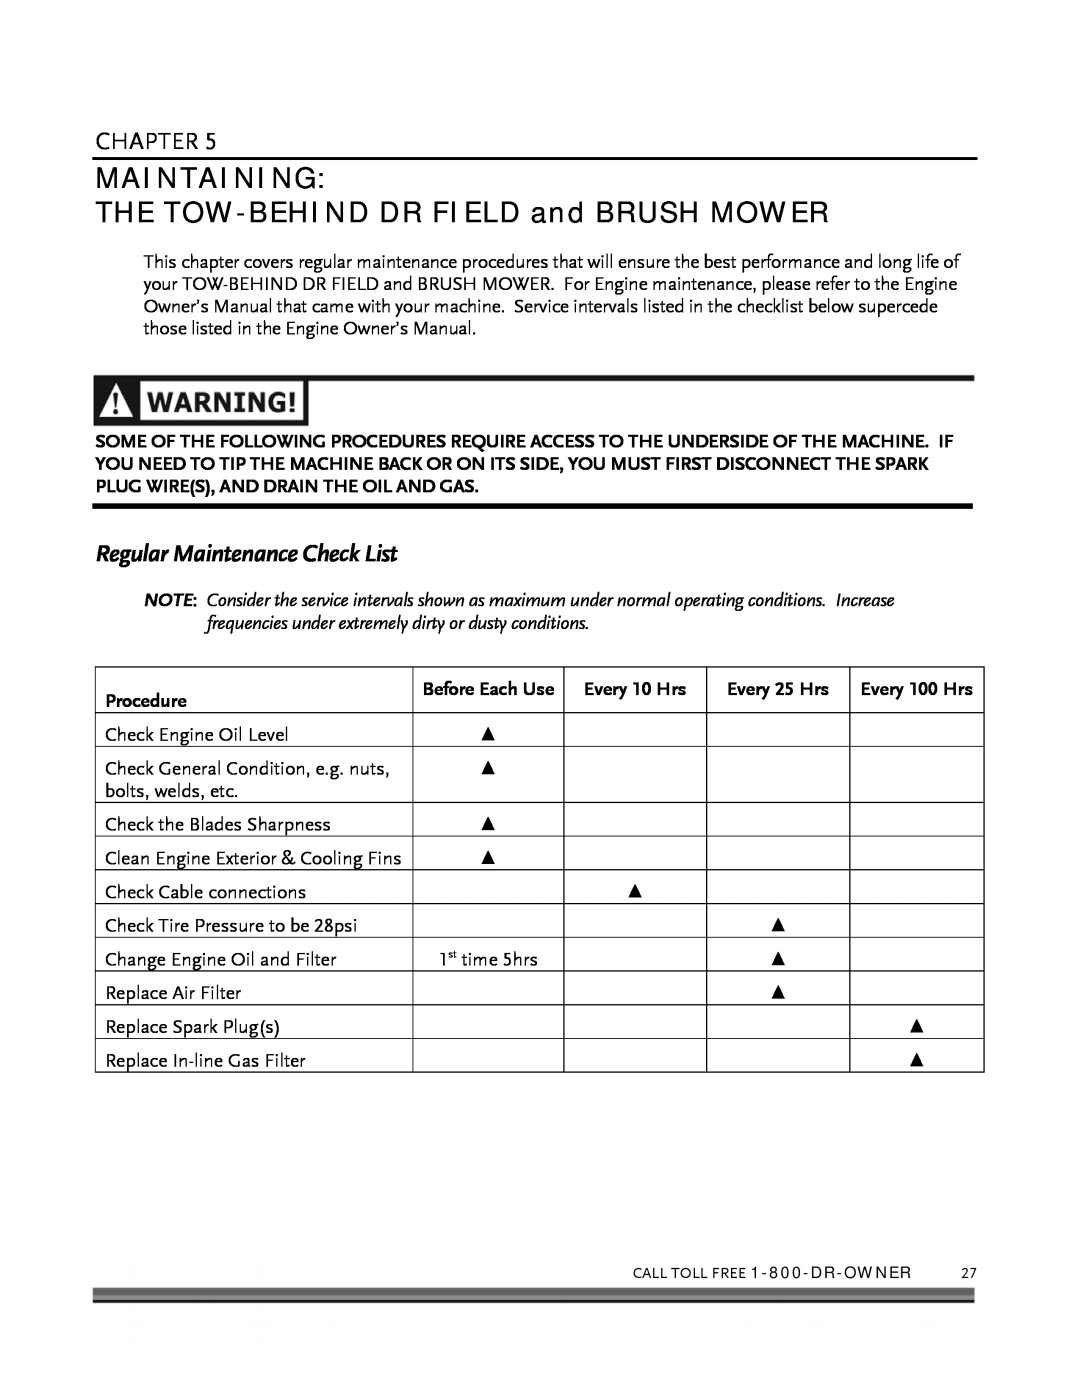 Briggs & Stratton FIELD and BRUSH MOWER manual Maintaining, Regular Maintenance Check List, Chapter 